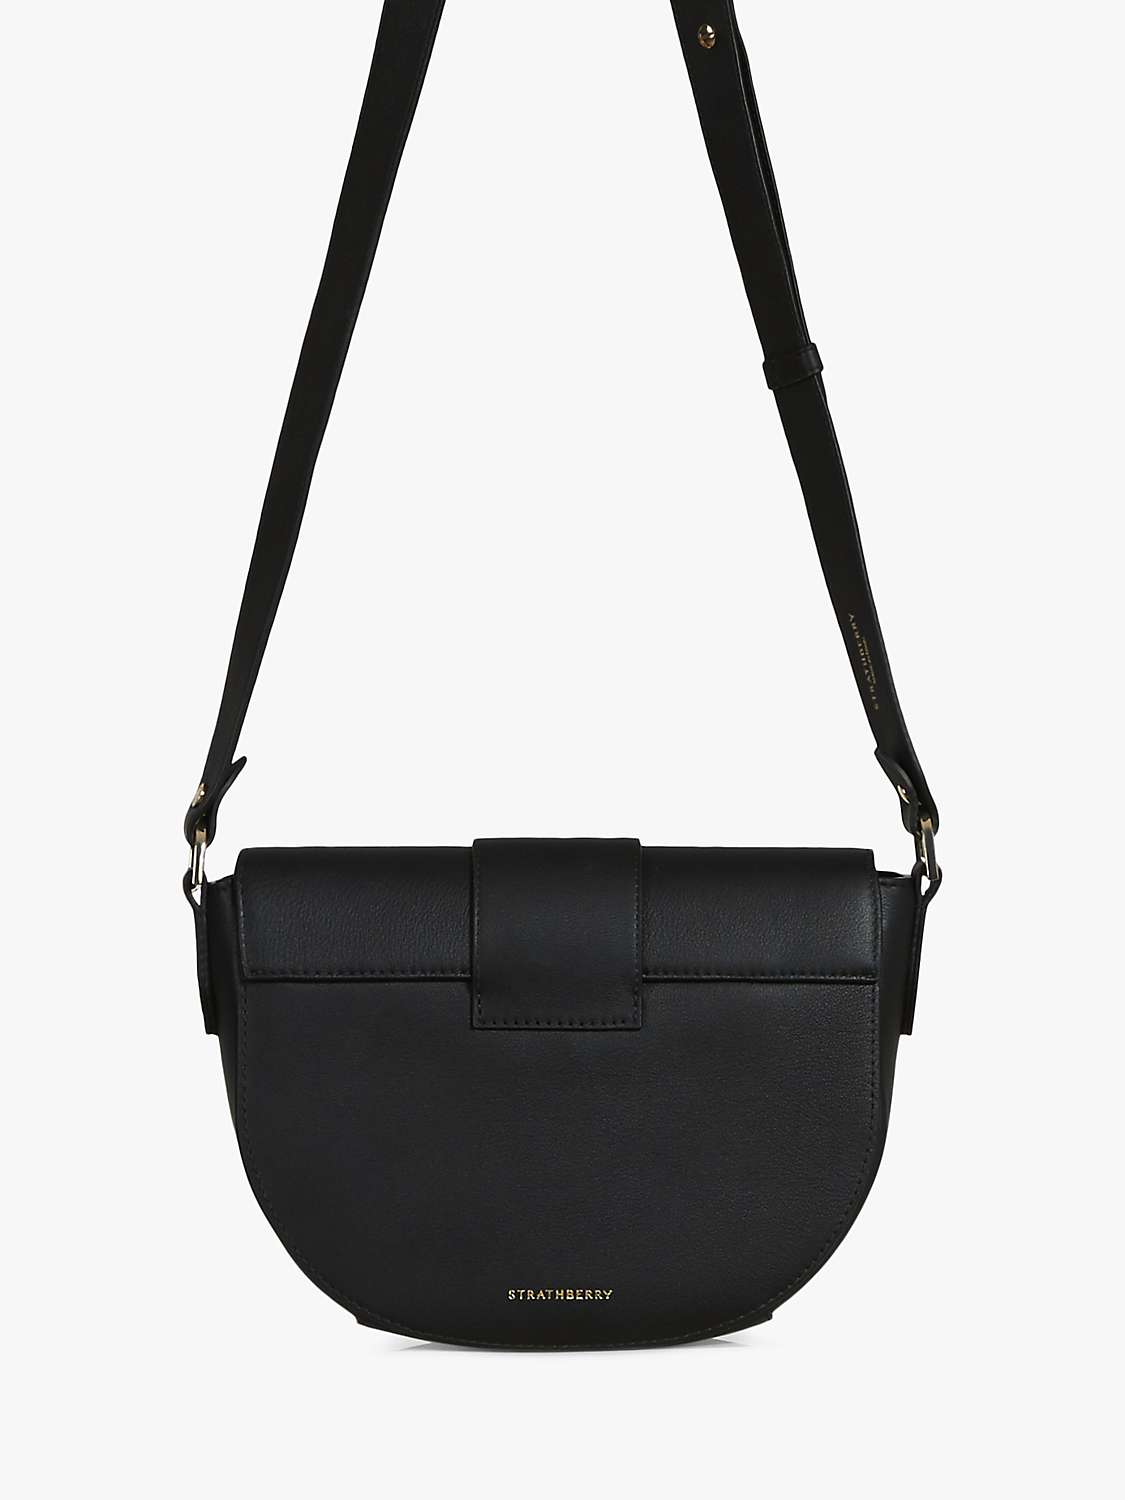 Buy Strathberry Crescent Leather Satchel Bag Online at johnlewis.com